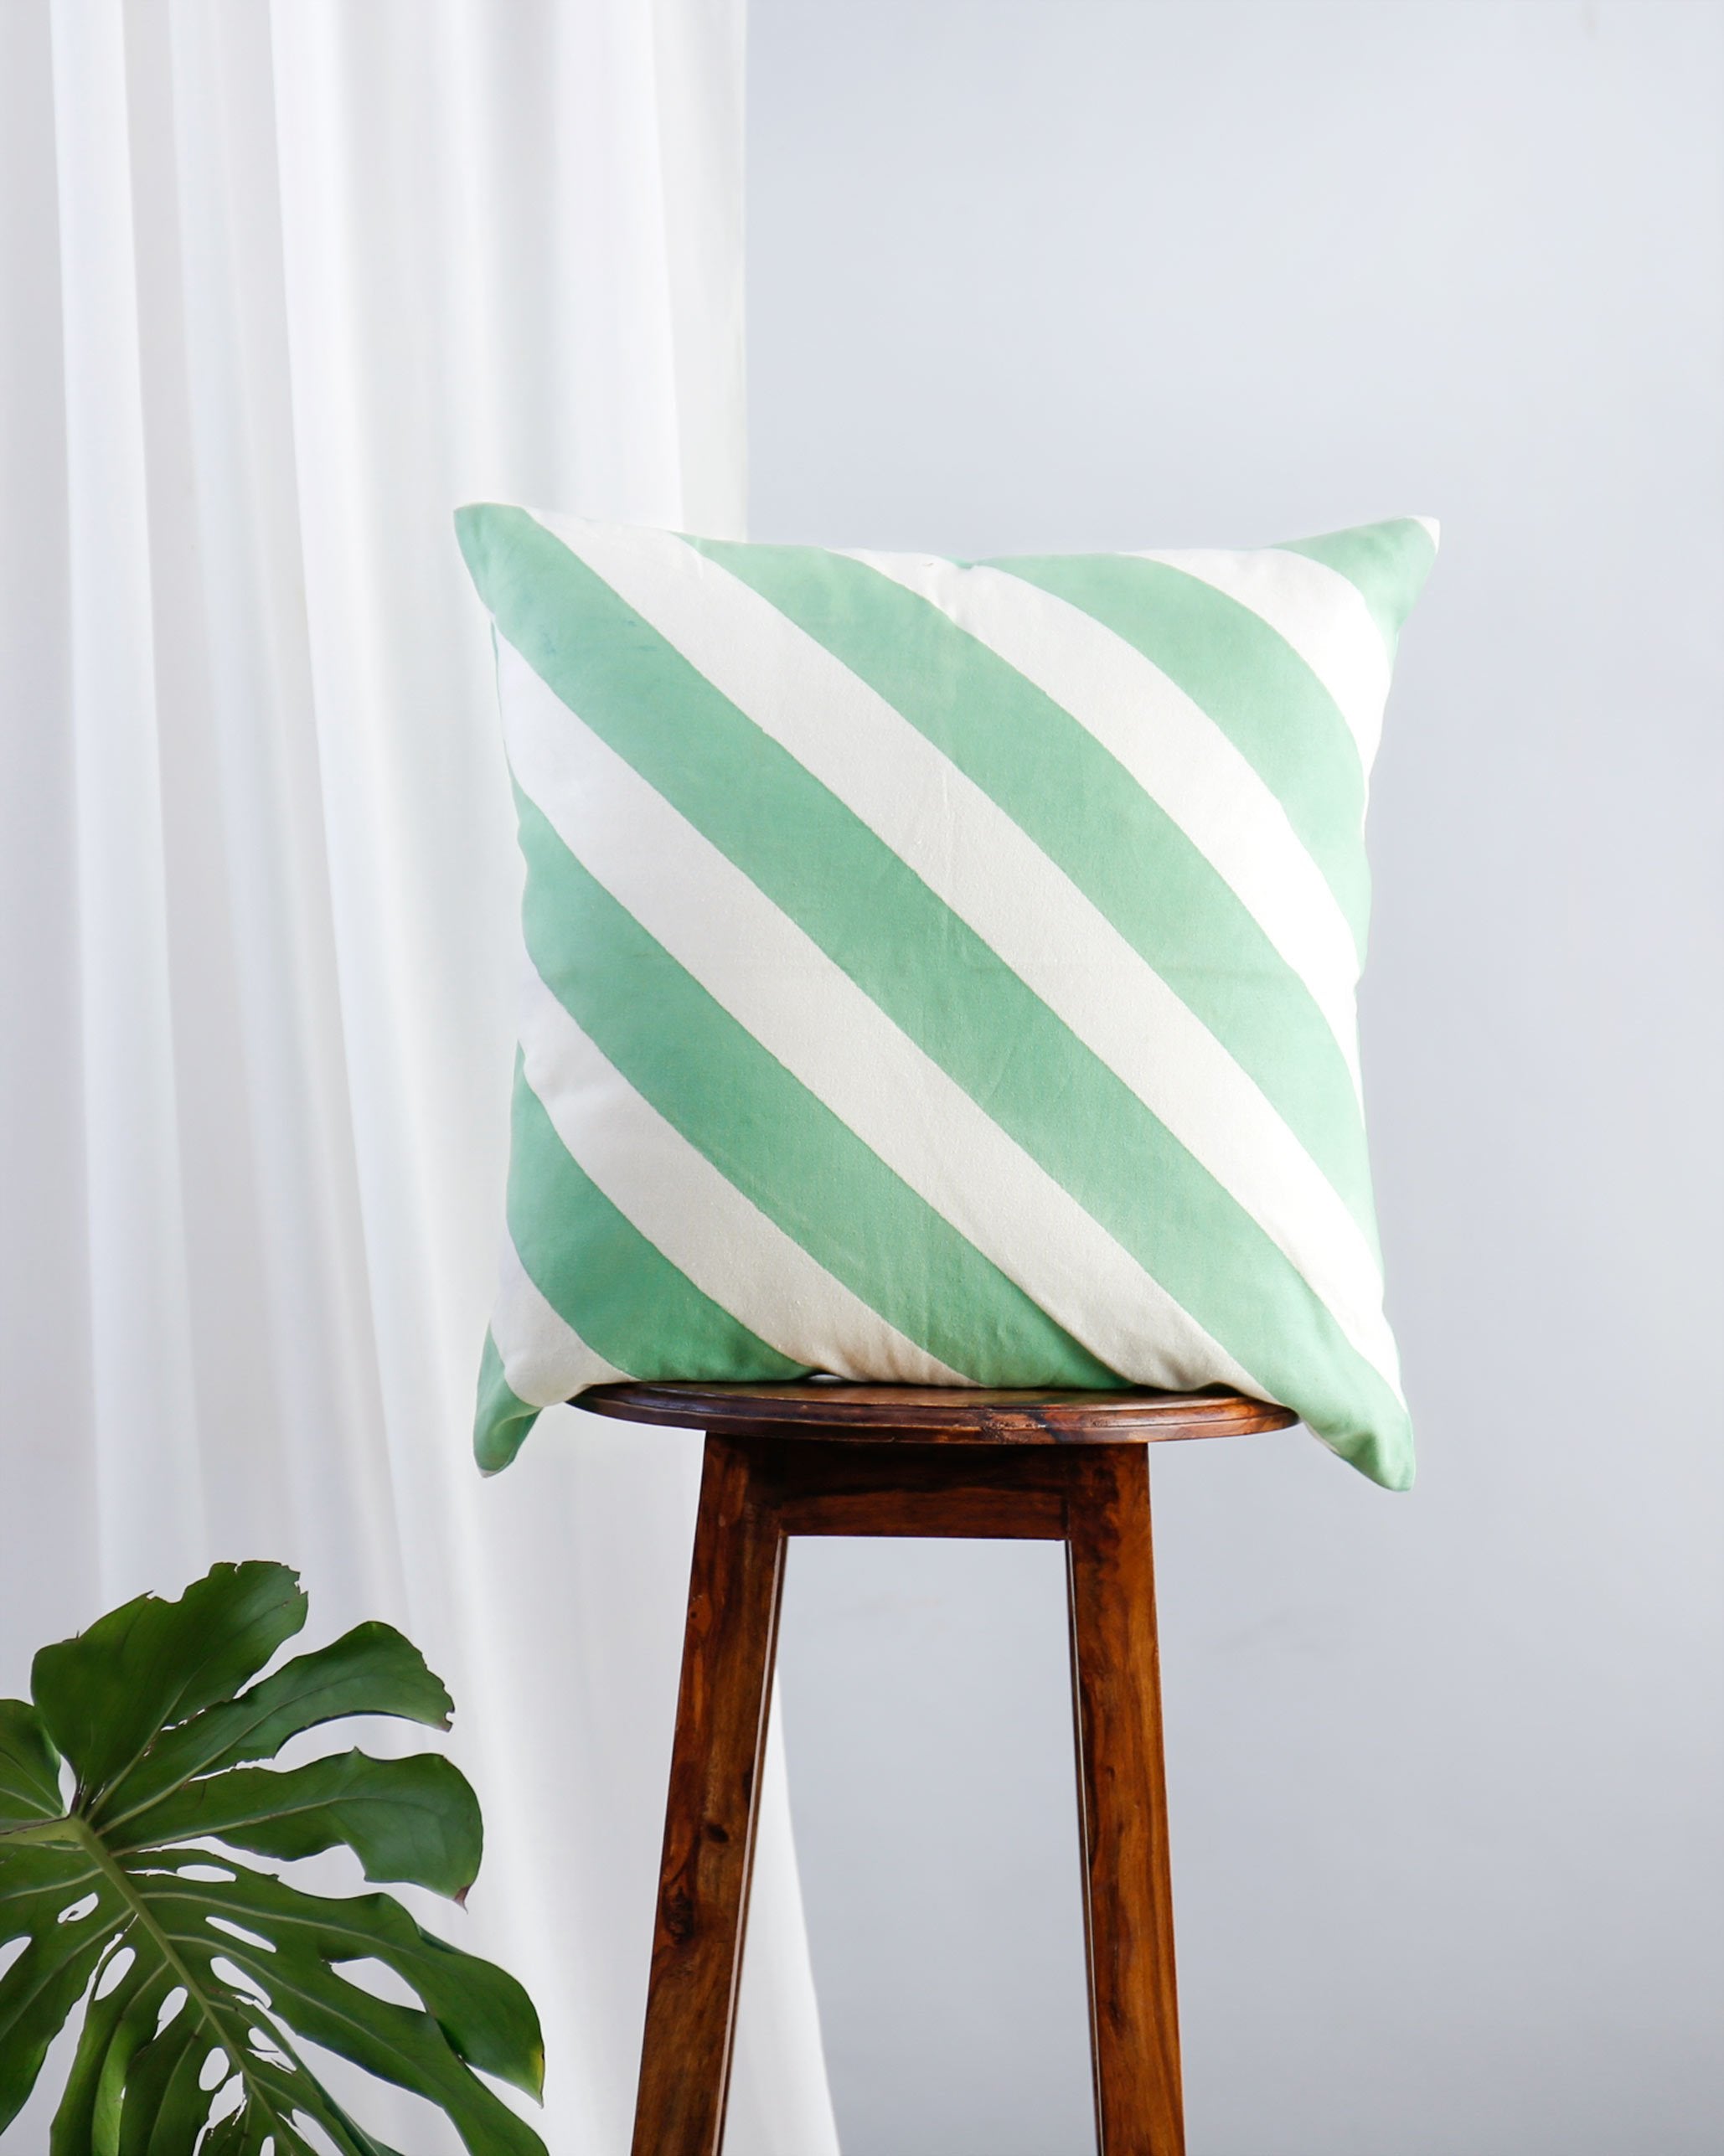 Verandah Candy Stripe Cushion Cover - Aqua